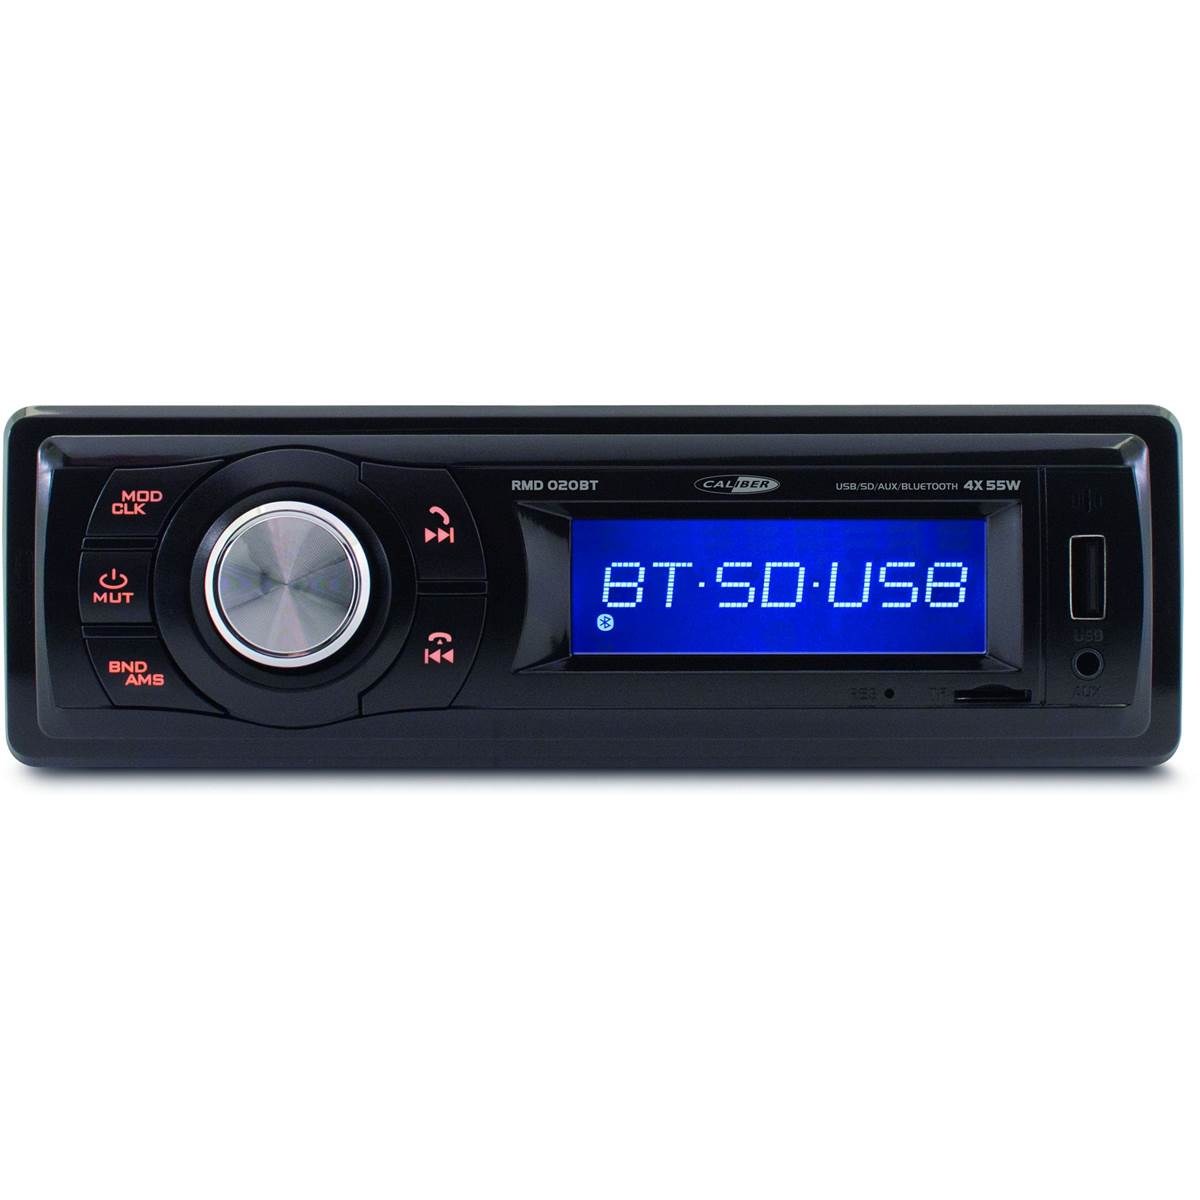 Autoradio Bluetooth Caliber Rmd020bt